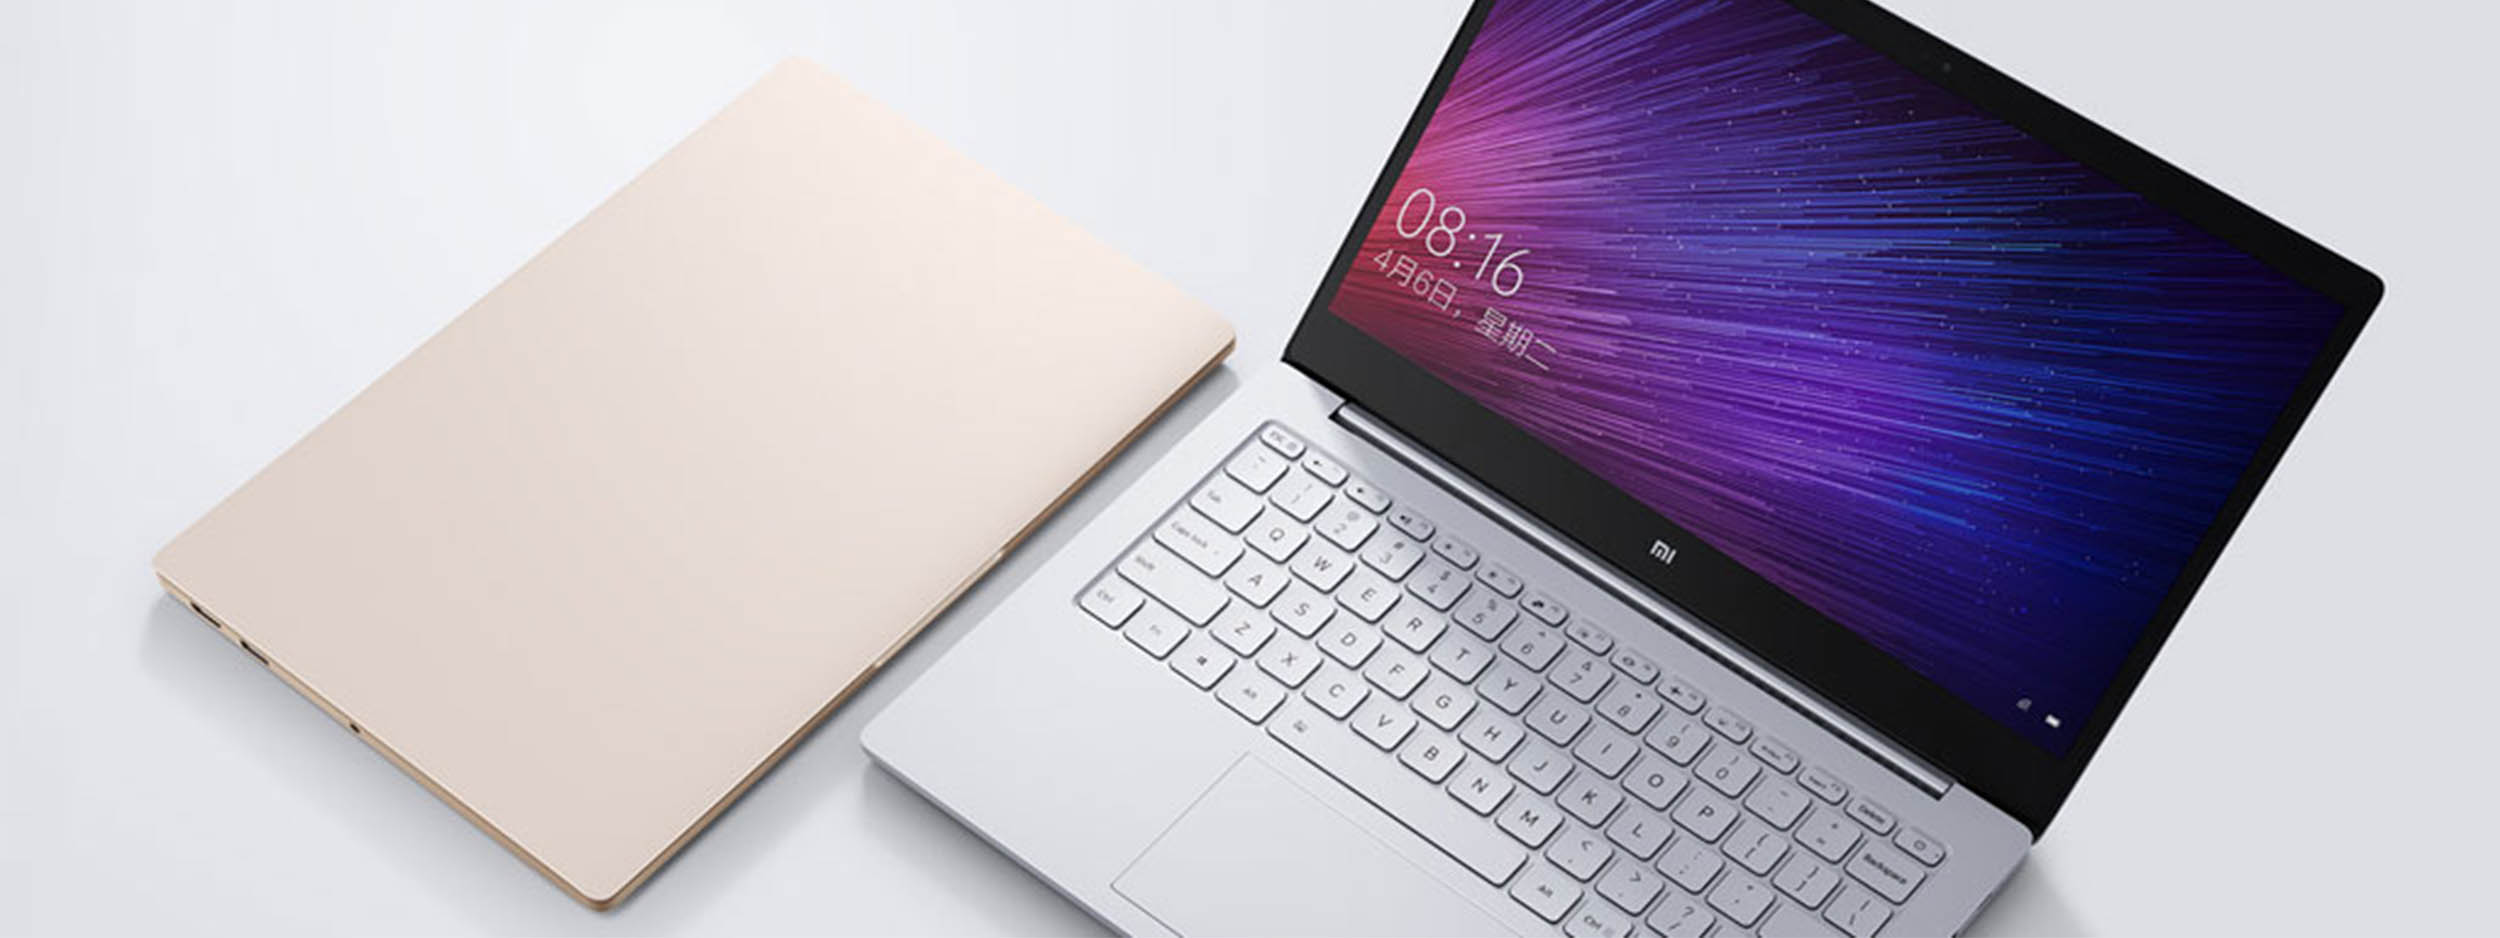 افشا شدن مشخصات لپ تاپ Xiaomi Mi Notebook Air 13.3